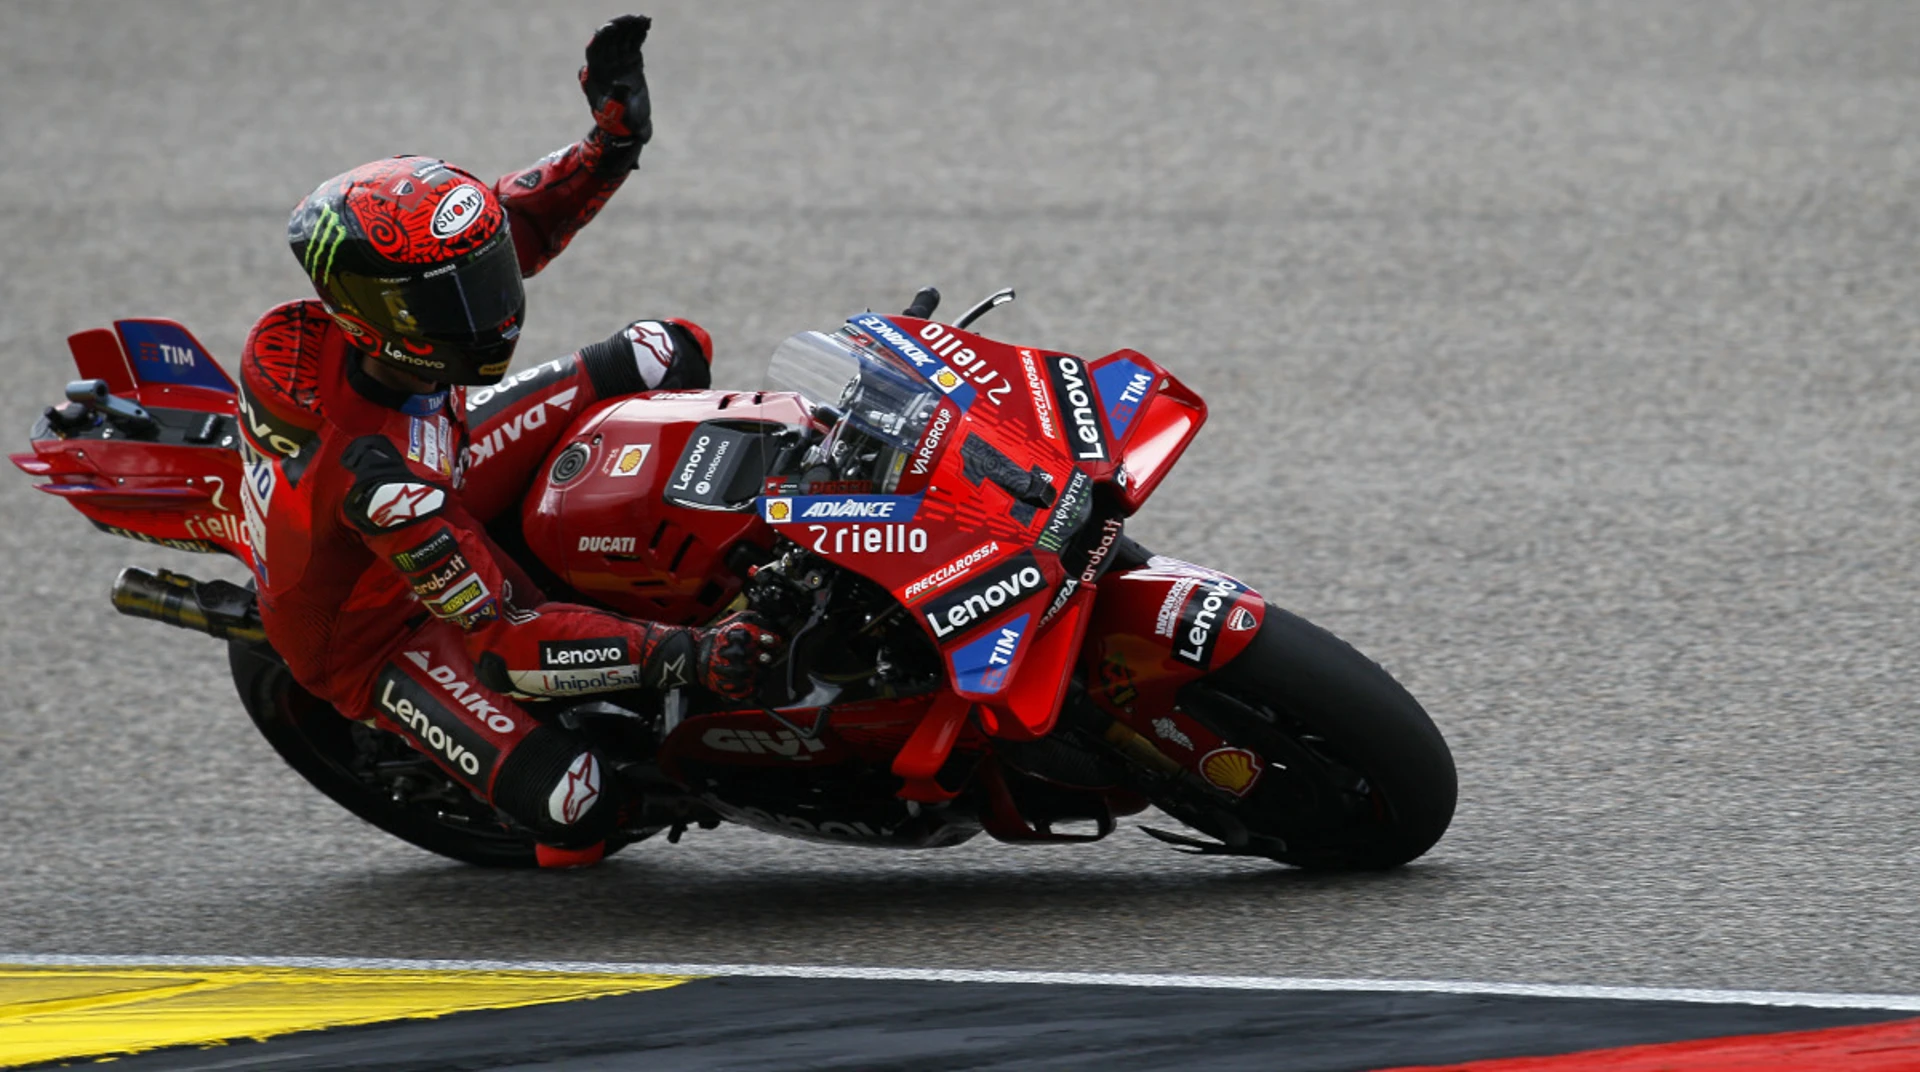 Bagnaia capitalises on late Martin crash to win German MotoGP